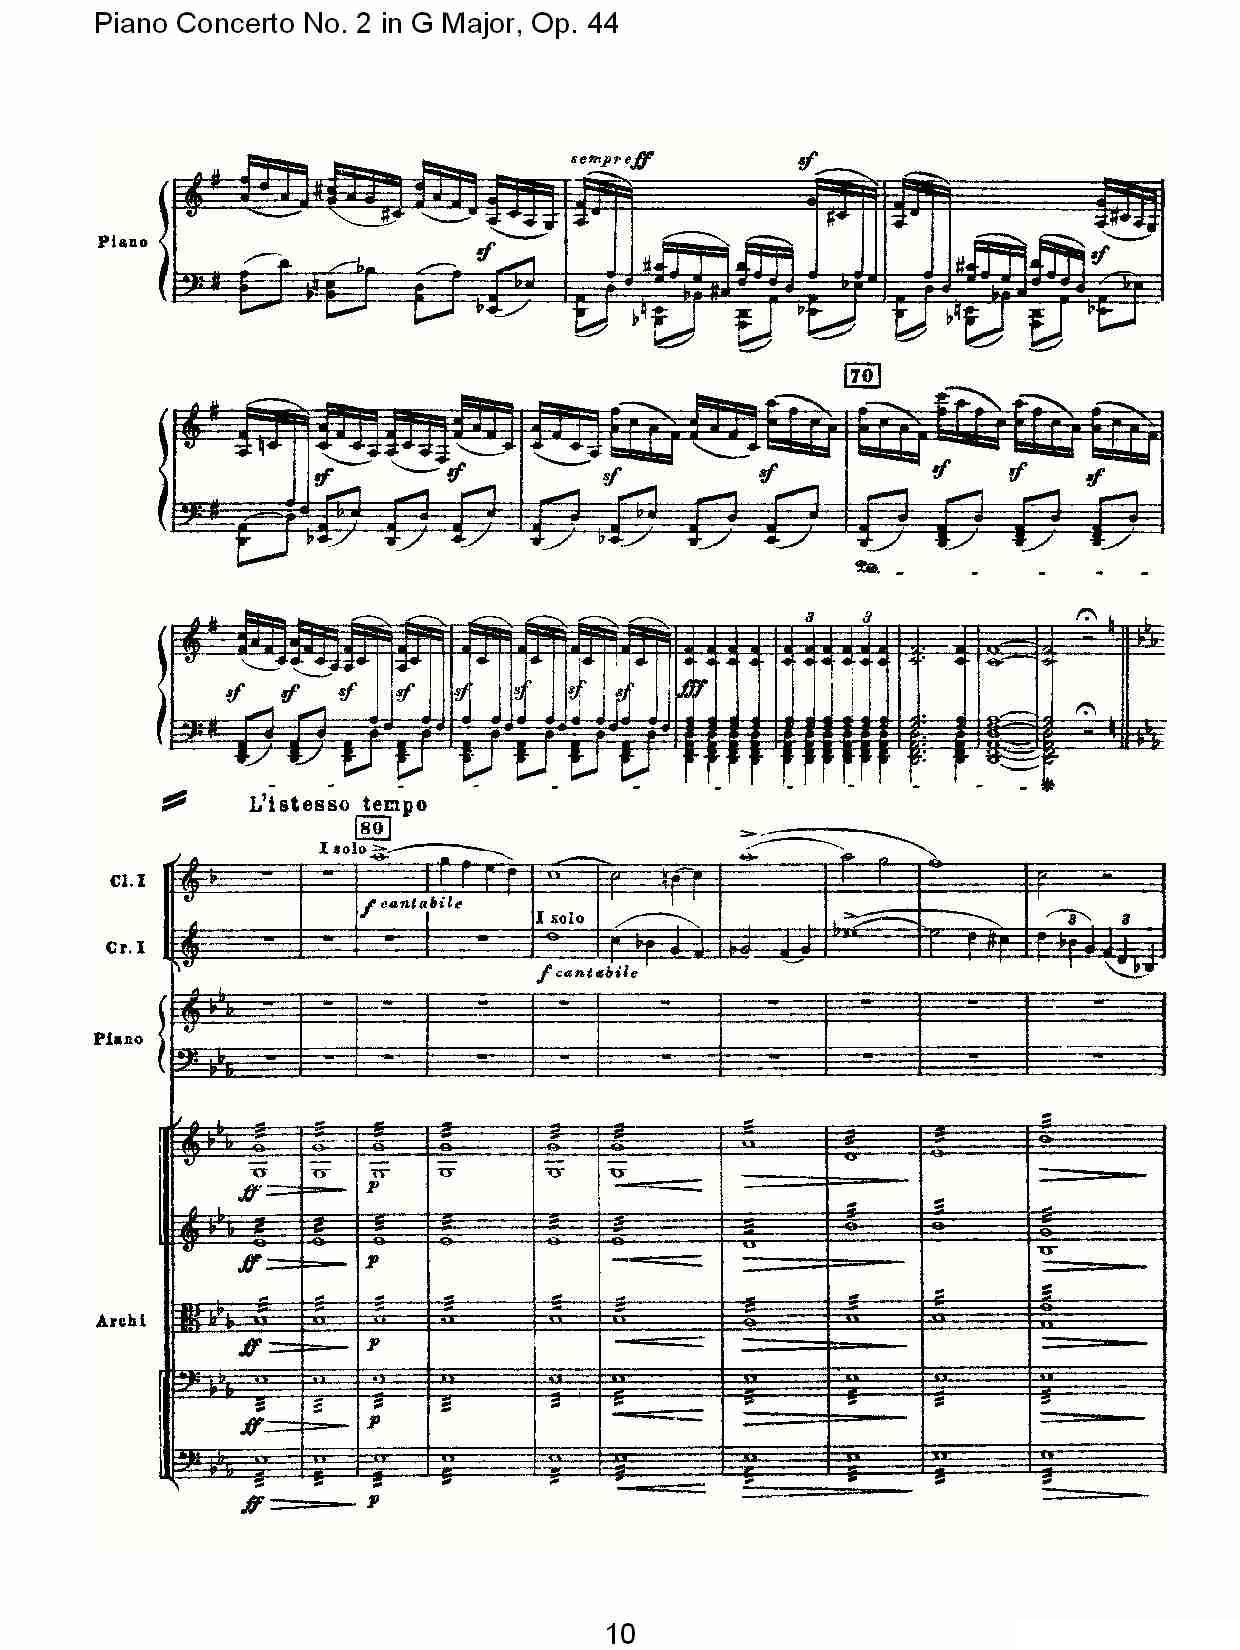 G大调第二钢琴协奏曲, Op.44第一乐章（一）钢琴曲谱（图10）